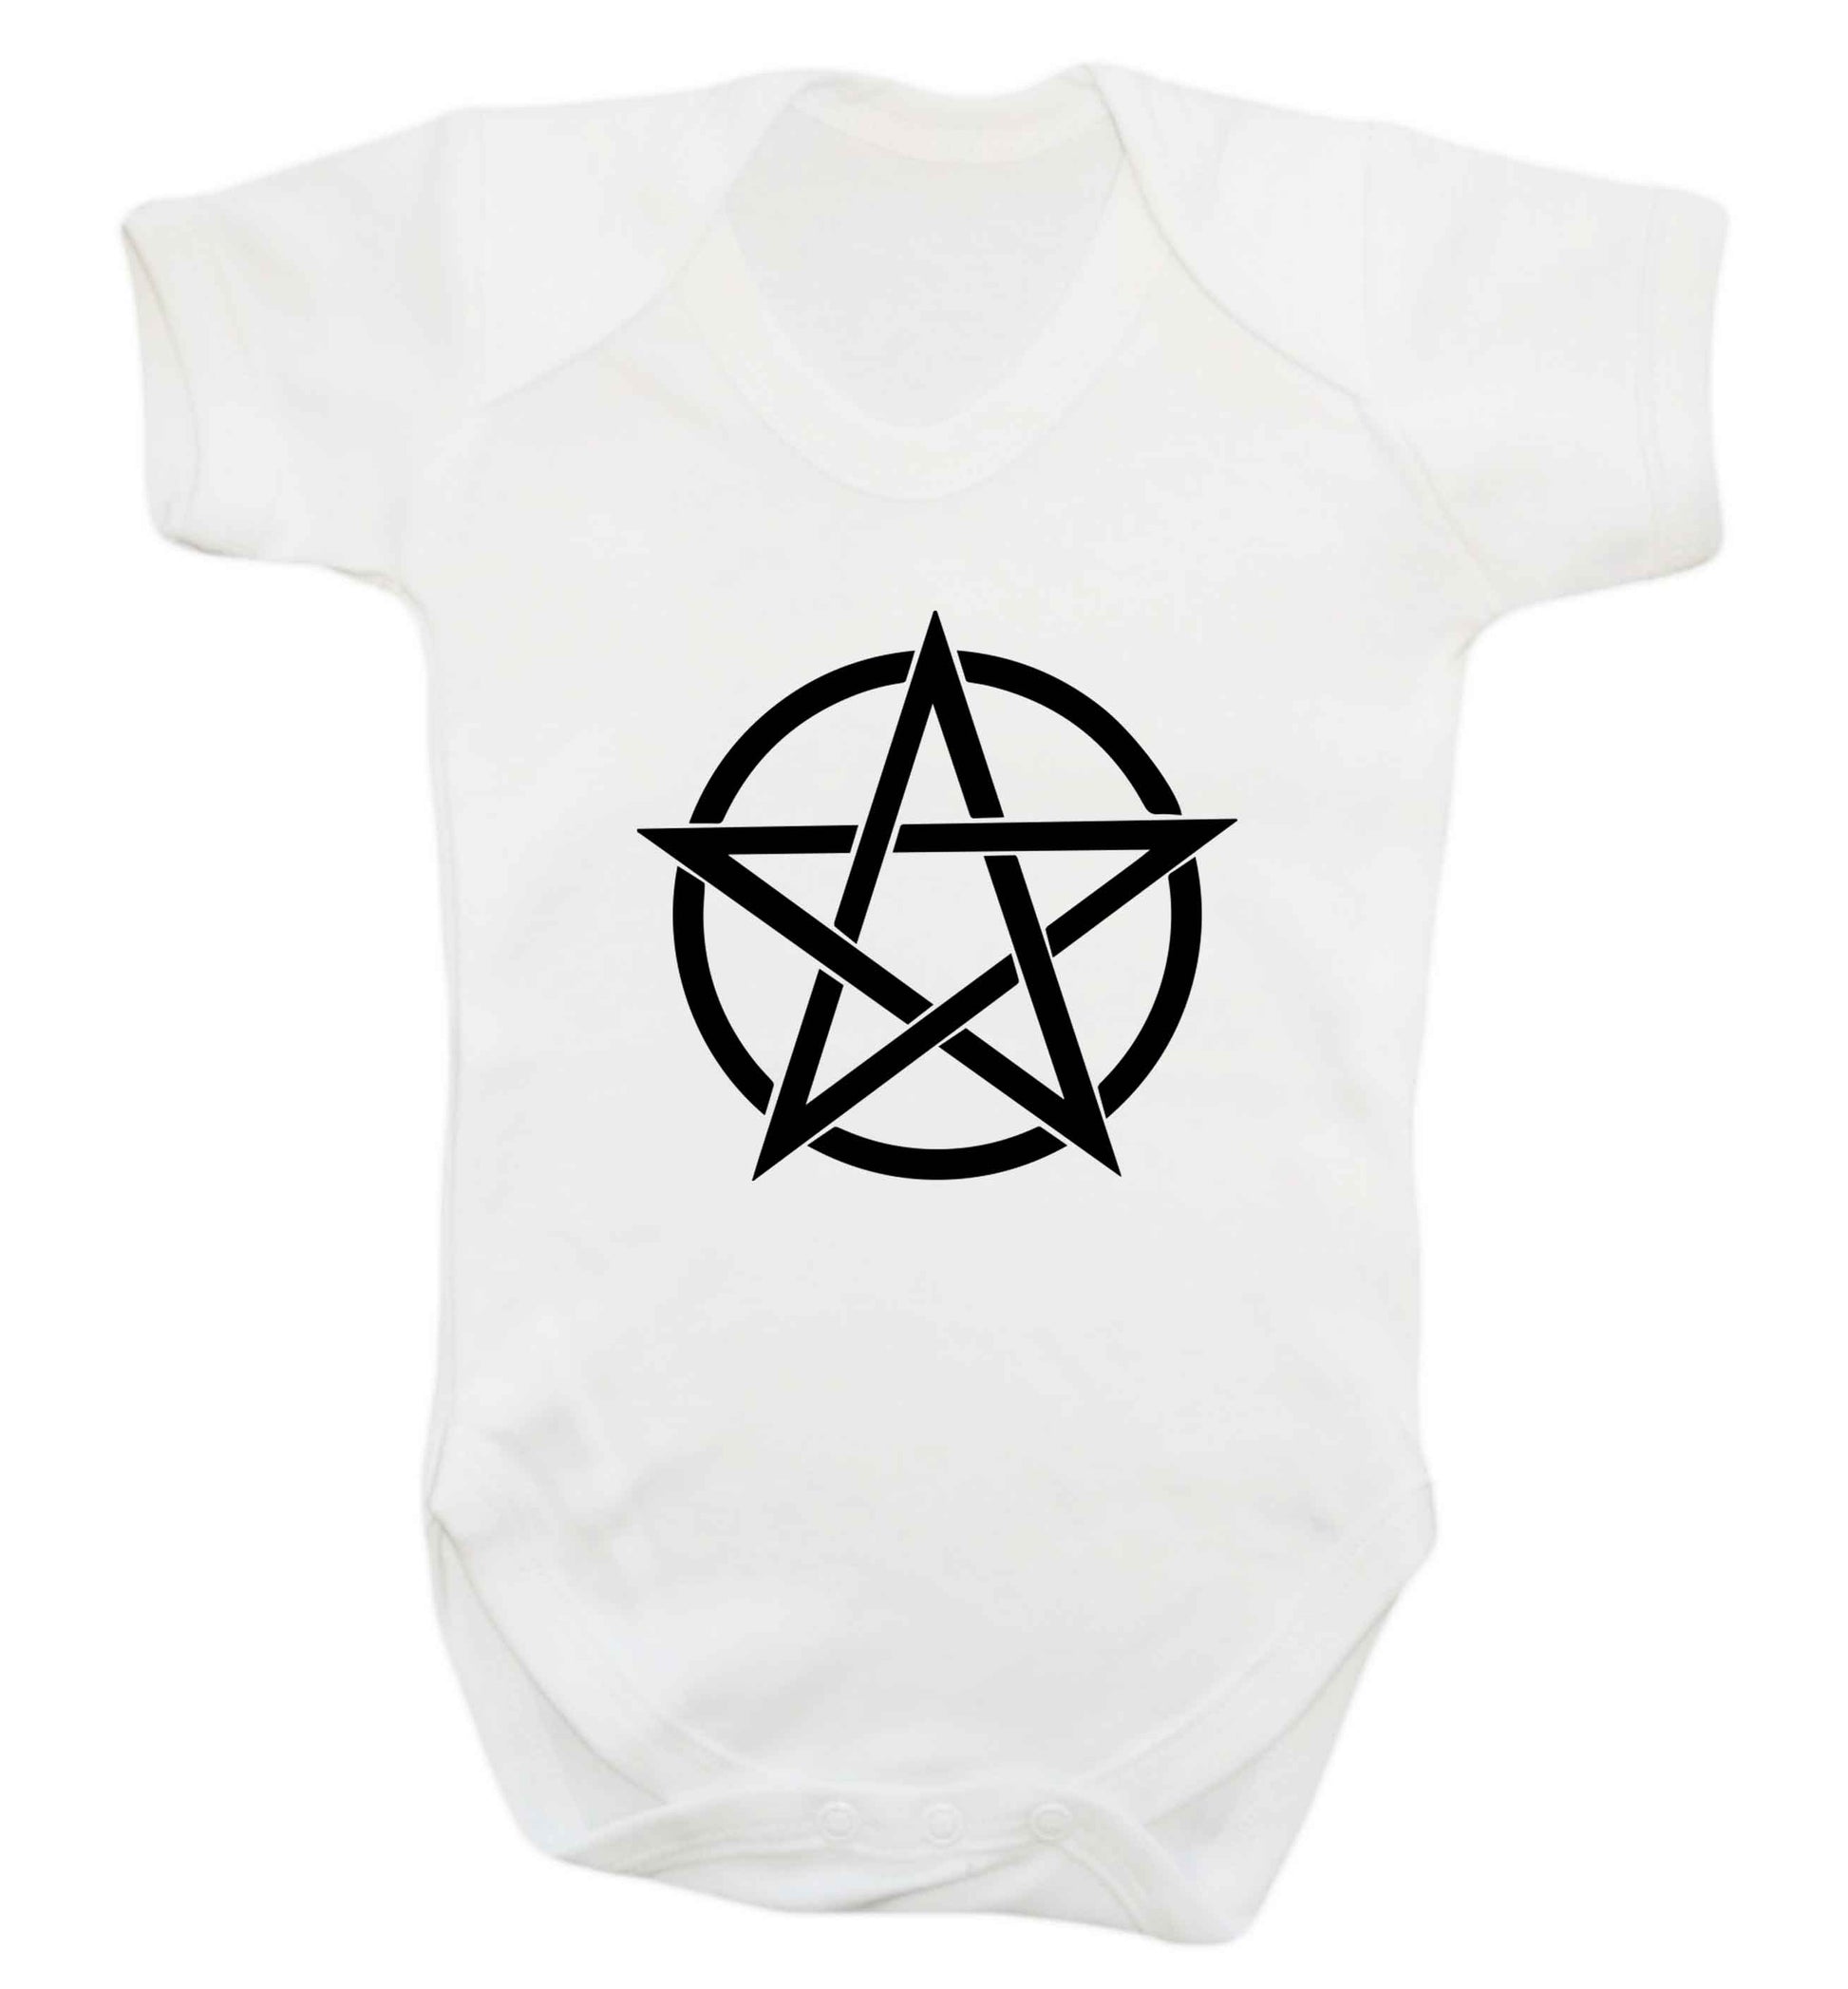 Pentagram symbol baby vest white 18-24 months